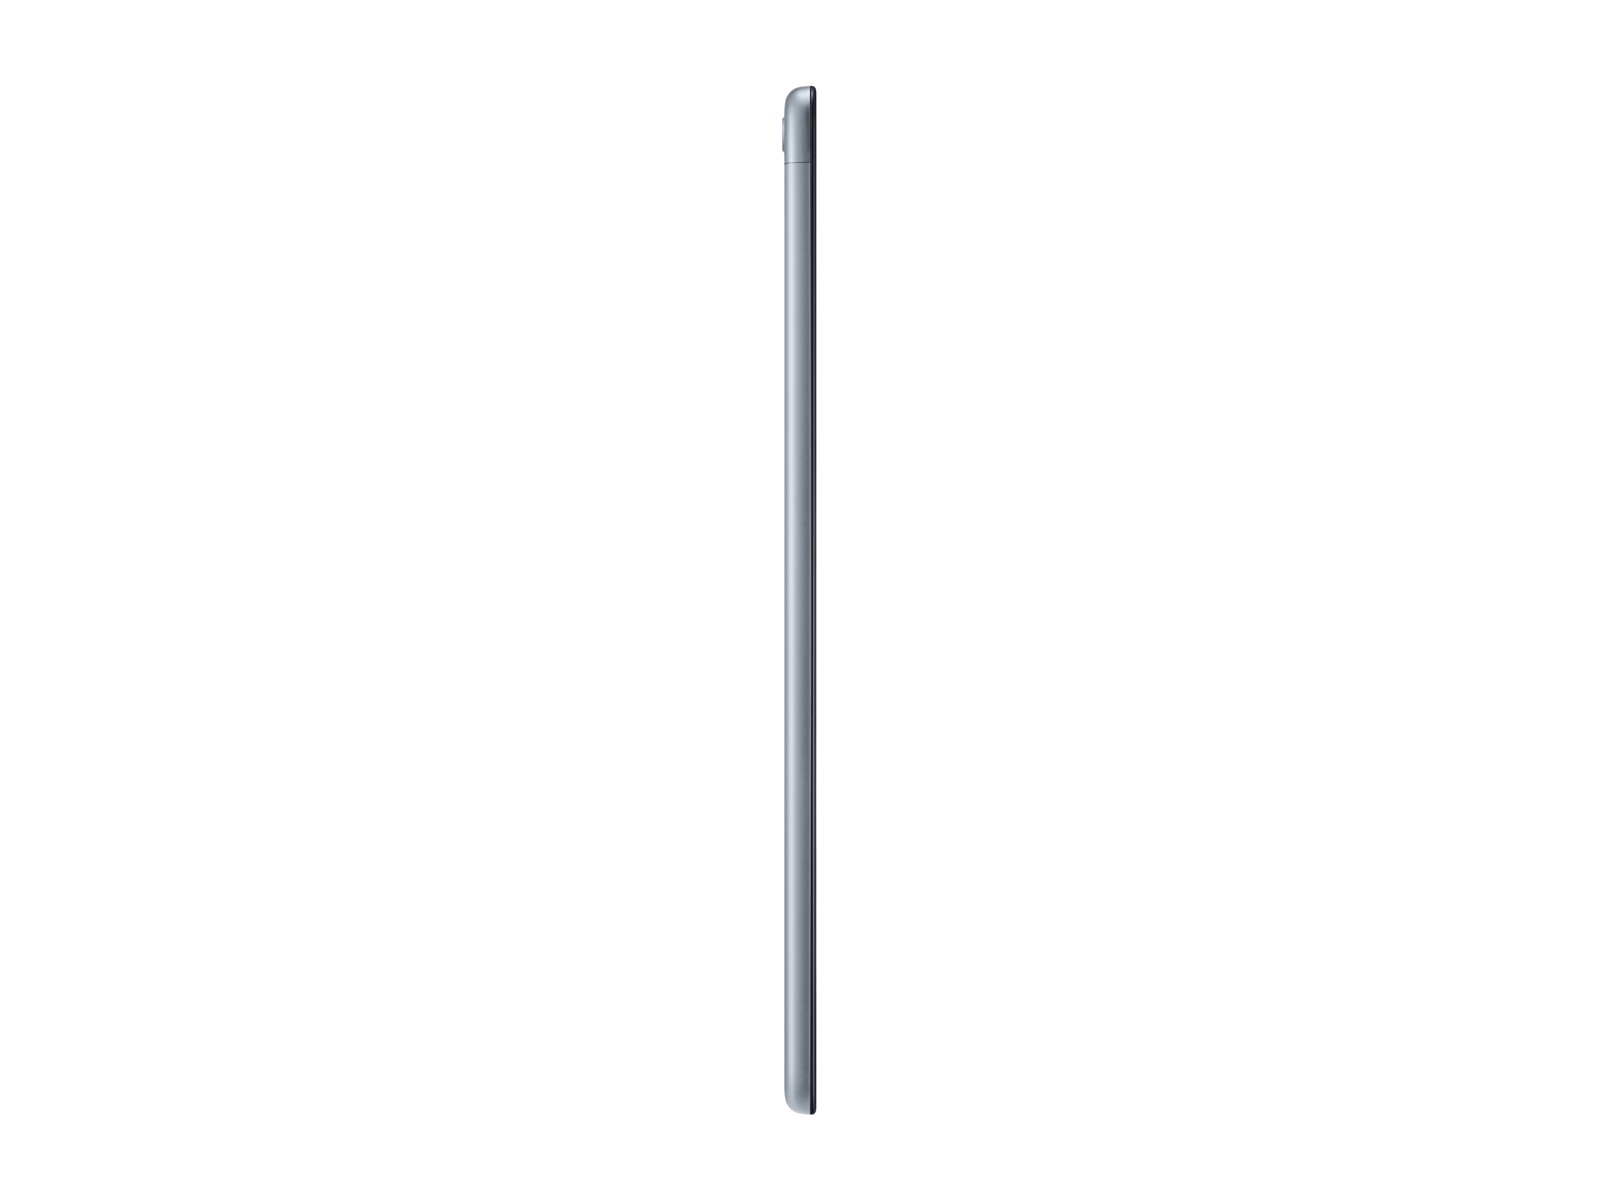 Thumbnail image of Galaxy Tab A 10.1 (2019), 32GB, Silver (Wi-Fi)